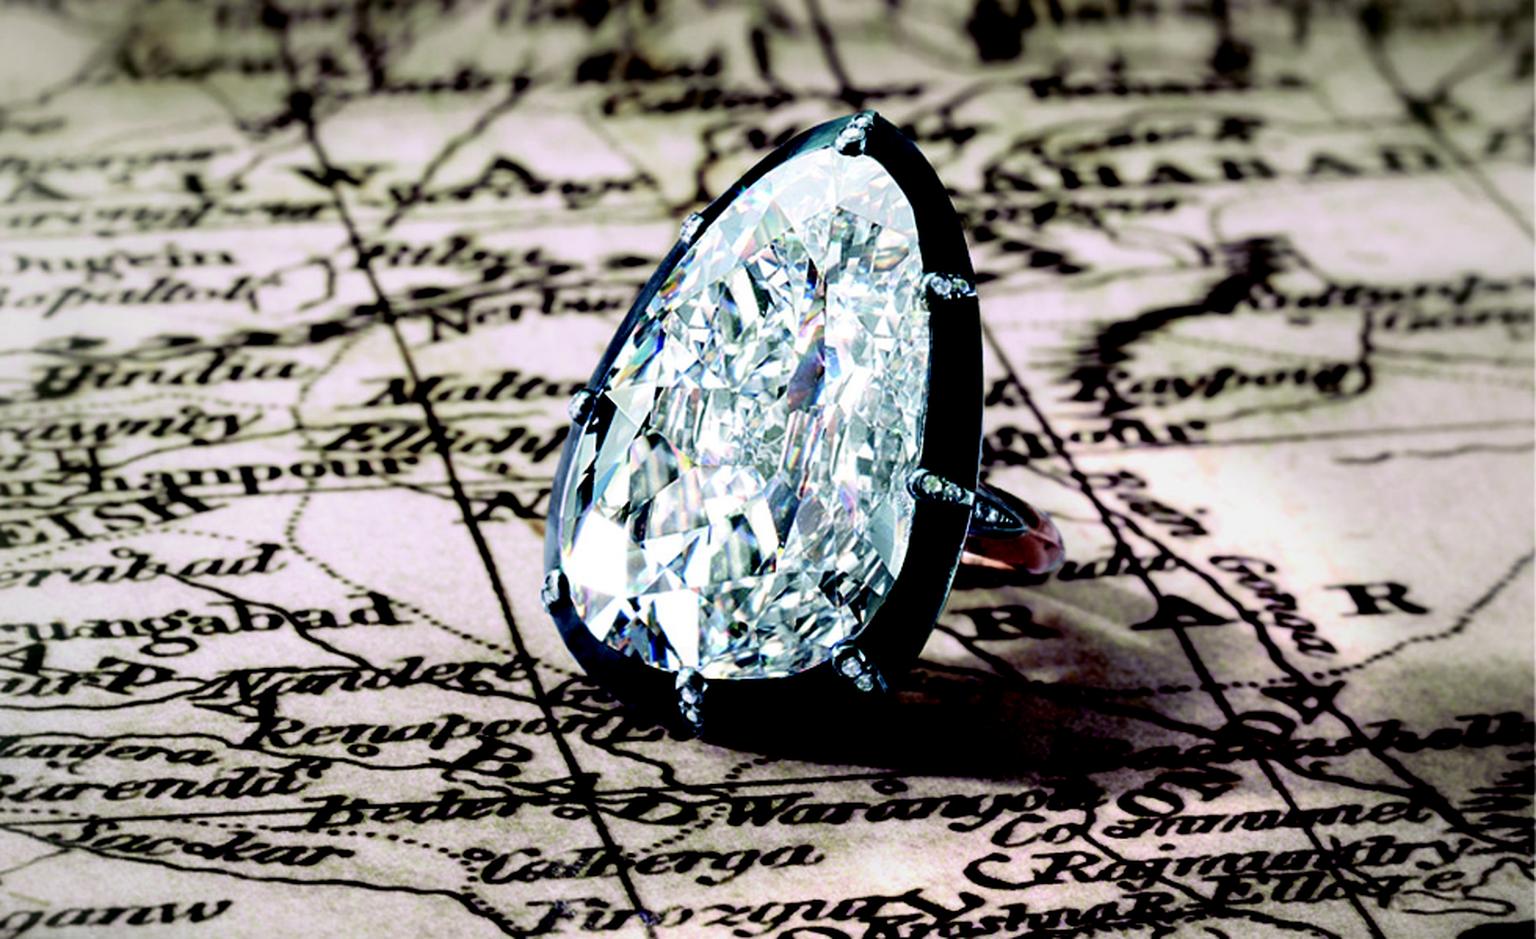 LOT 2687. Spectacular diamond ring. EST 40,000,000 - 50,000,000 HKD. LOT SOLD 43,220,000 HKD